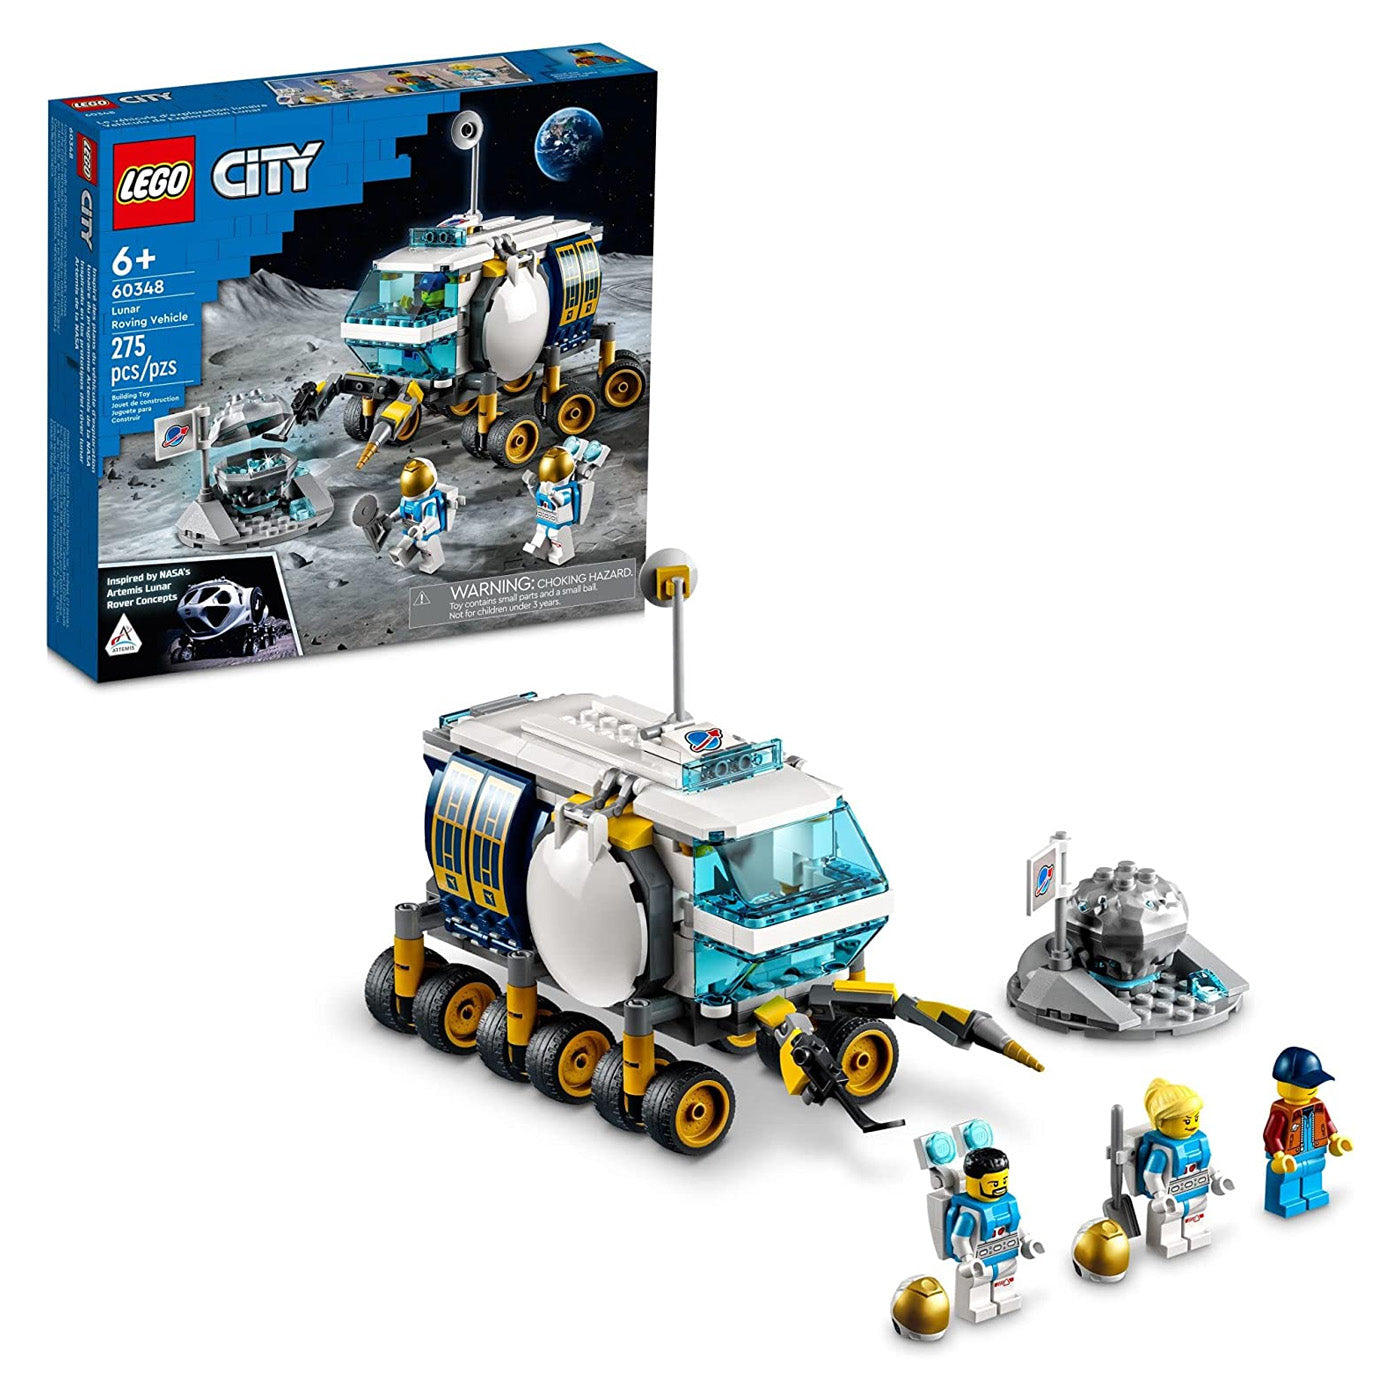 LEGO City: Lunar Roving Vehicle Set 60348